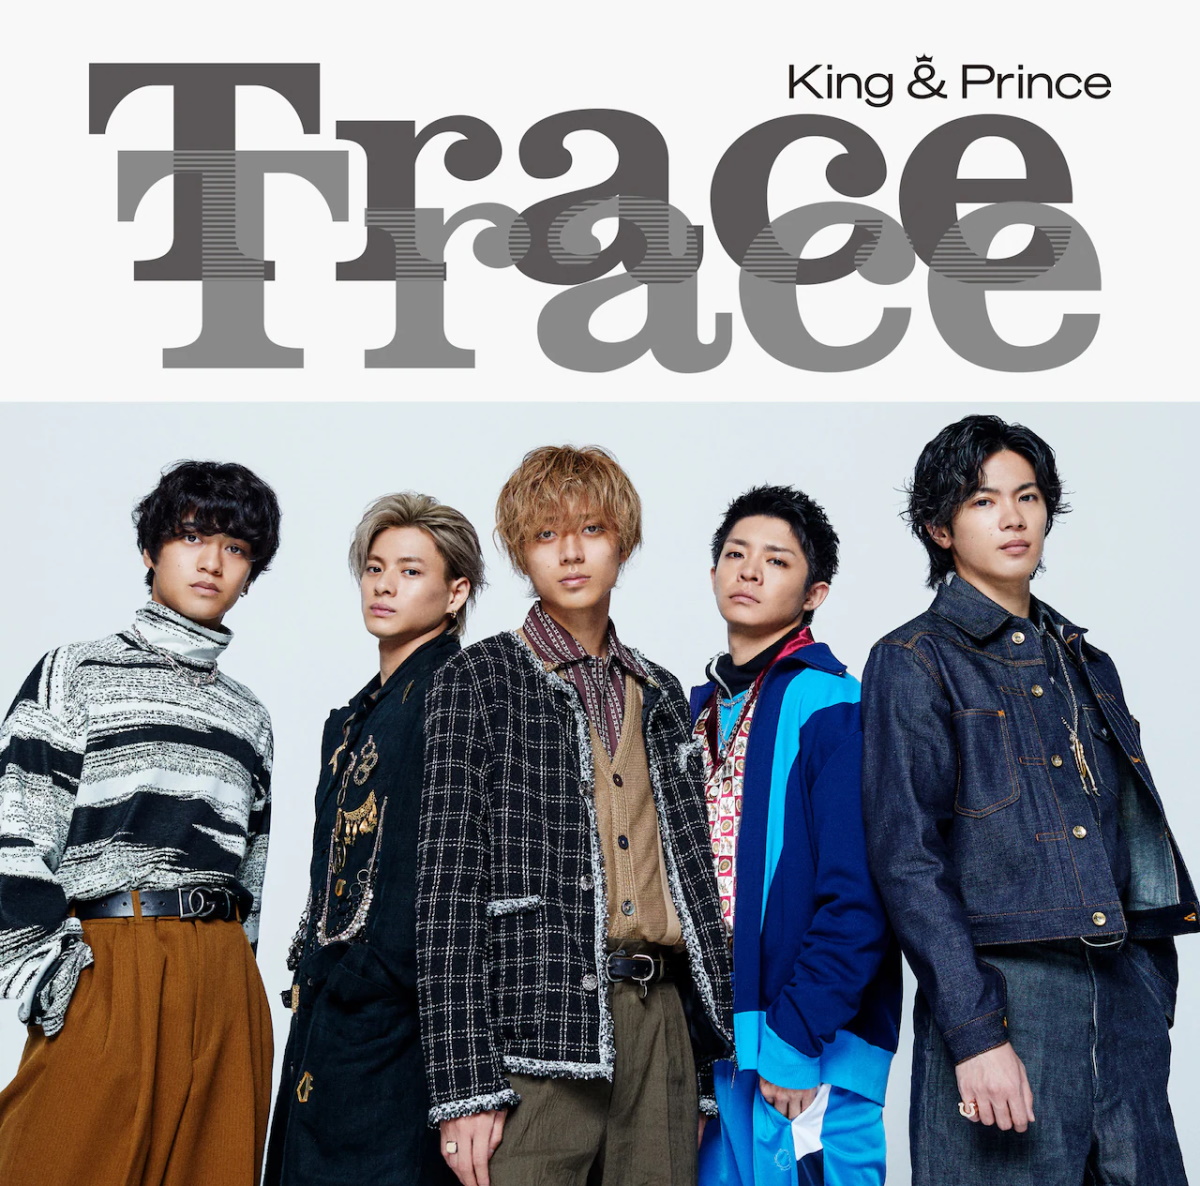 『King & Prince - TraceTrace』収録の『TraceTrace』ジャケット